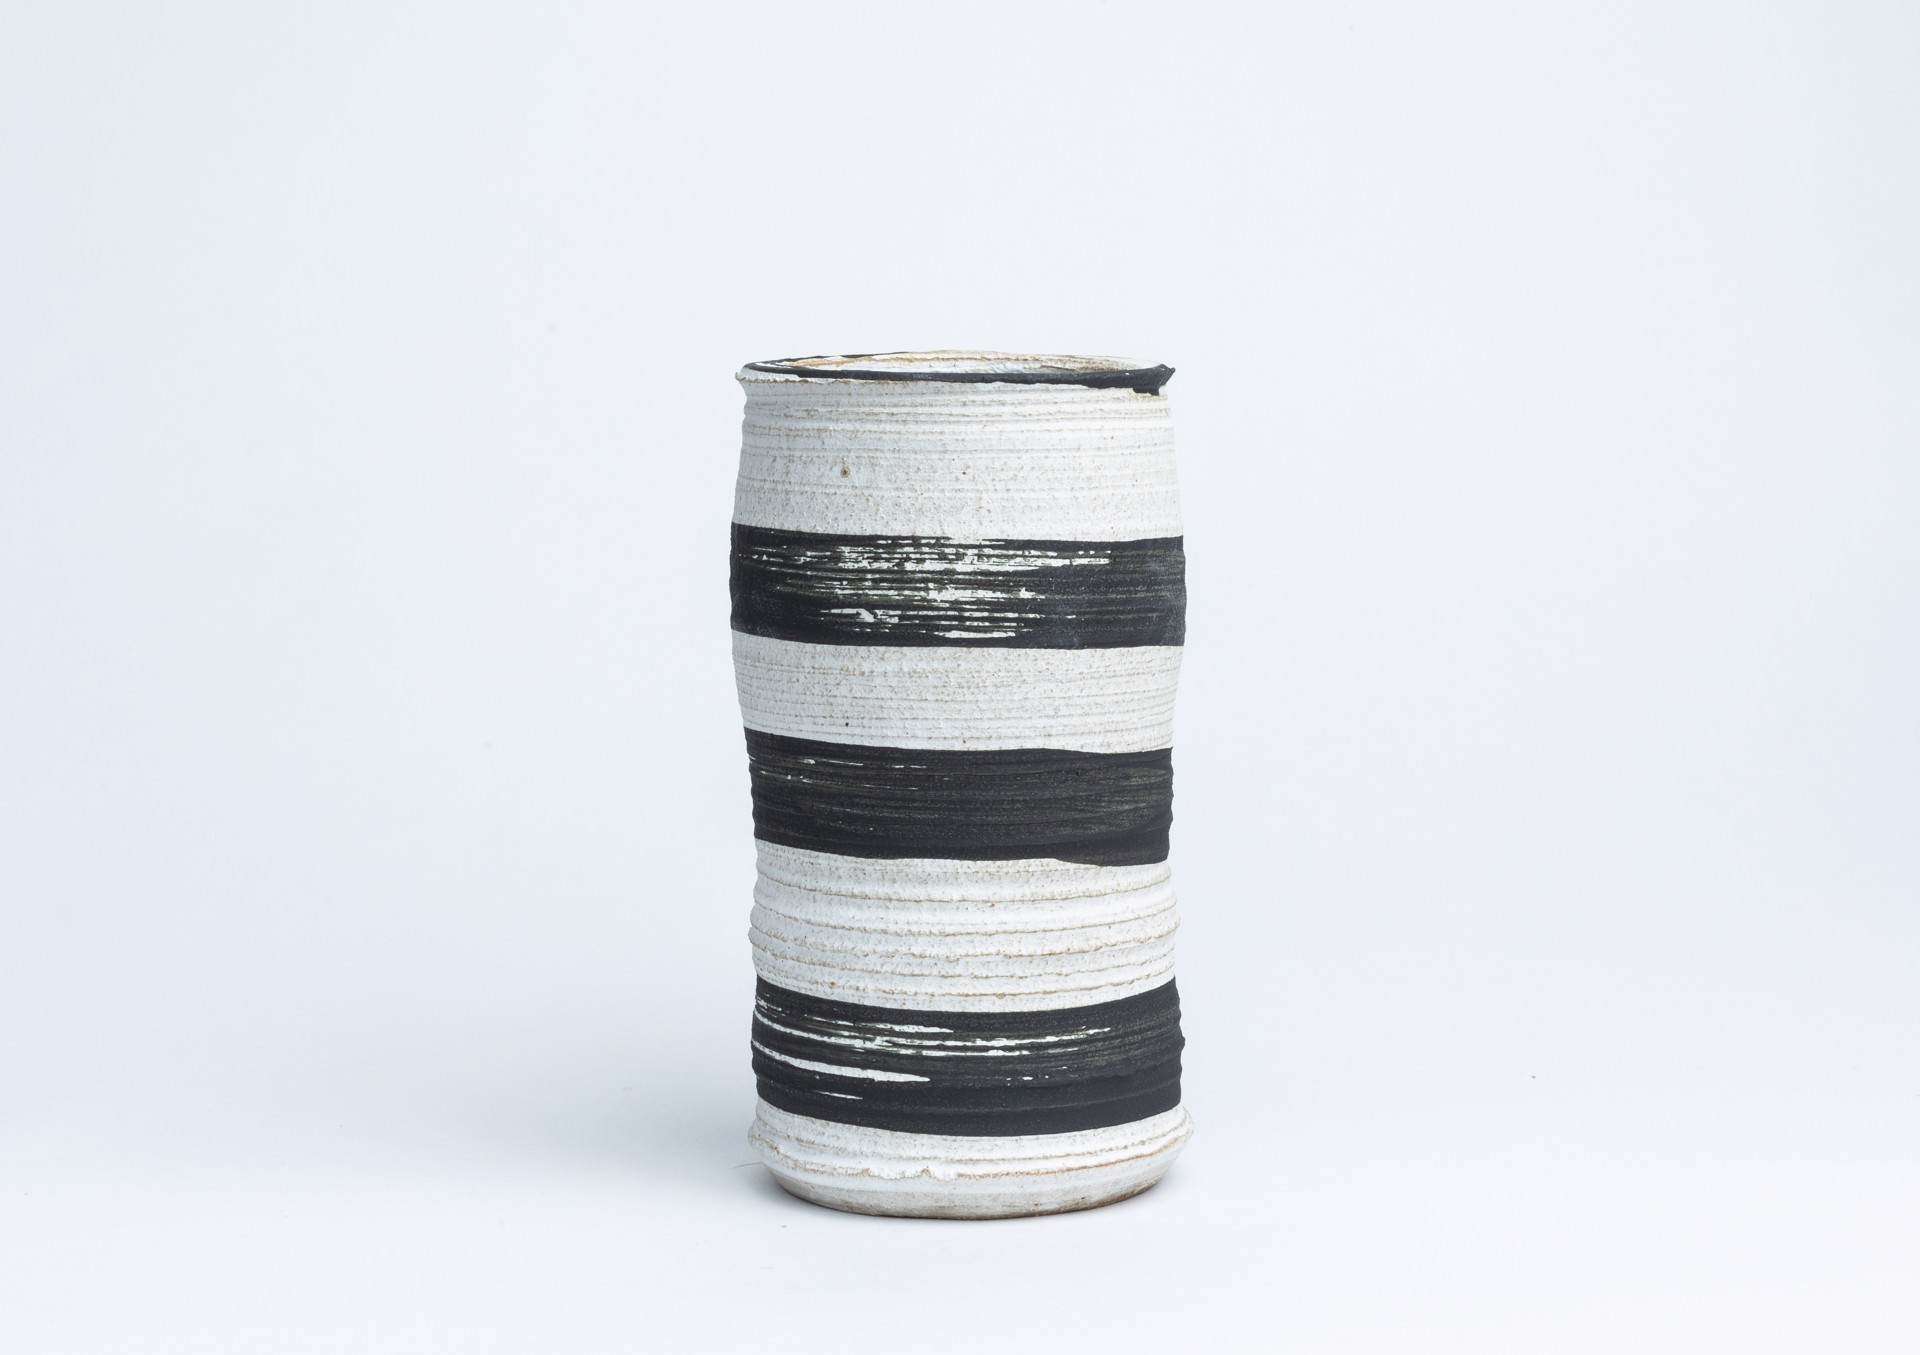 B & W Striped Tumbler Vase by Glory Day Loflin Ceramics